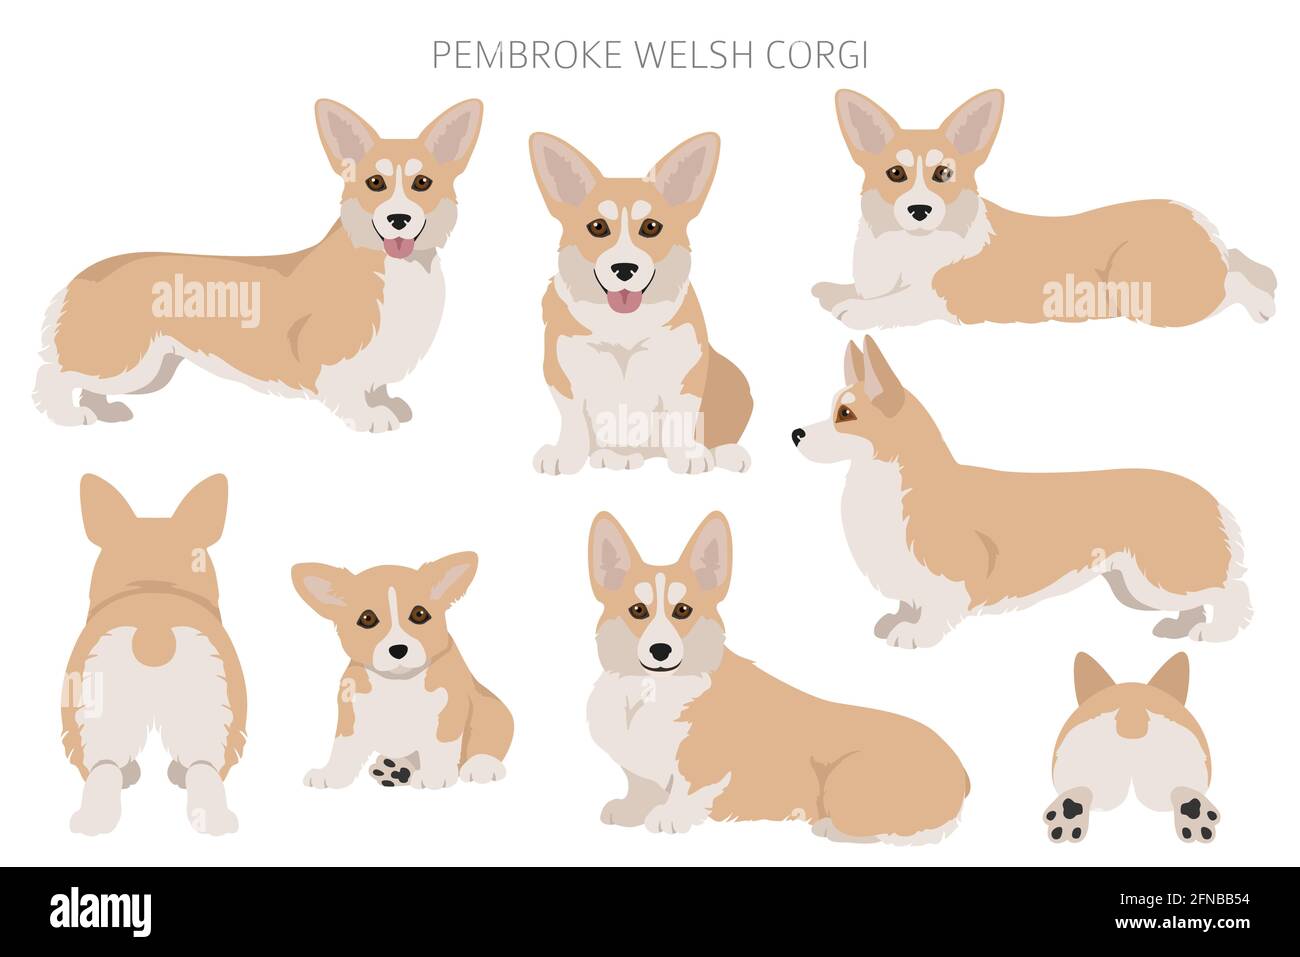 Welsh corgi pembroke clipart. Different poses, coat colors set.  Vector illustration Stock Vector